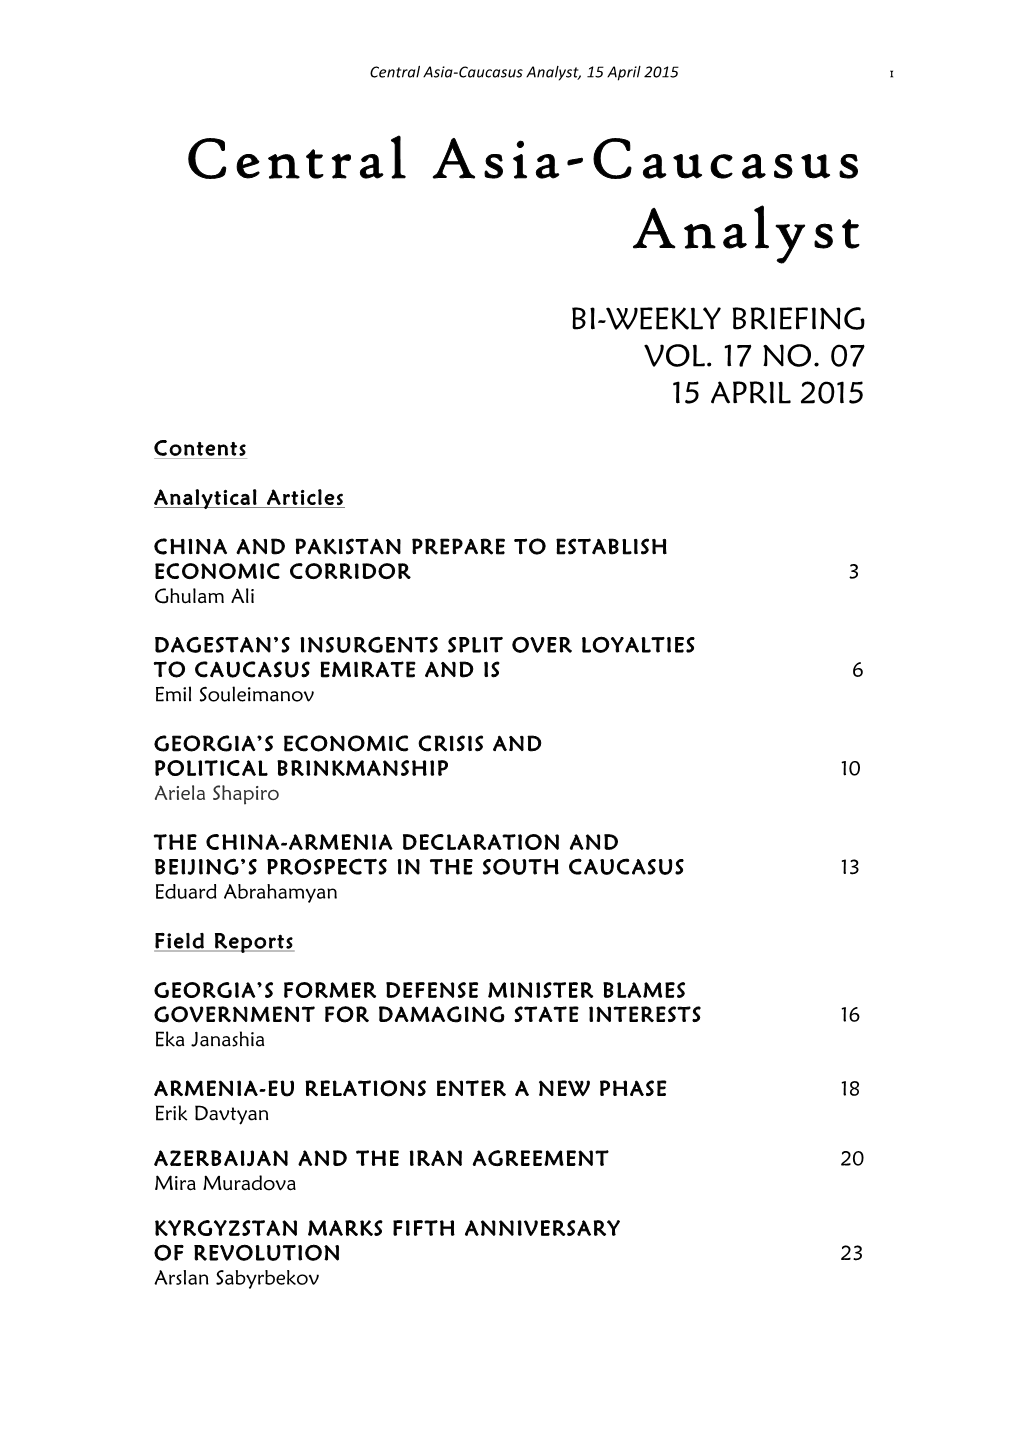 CACI Analyst, April 15, 2015